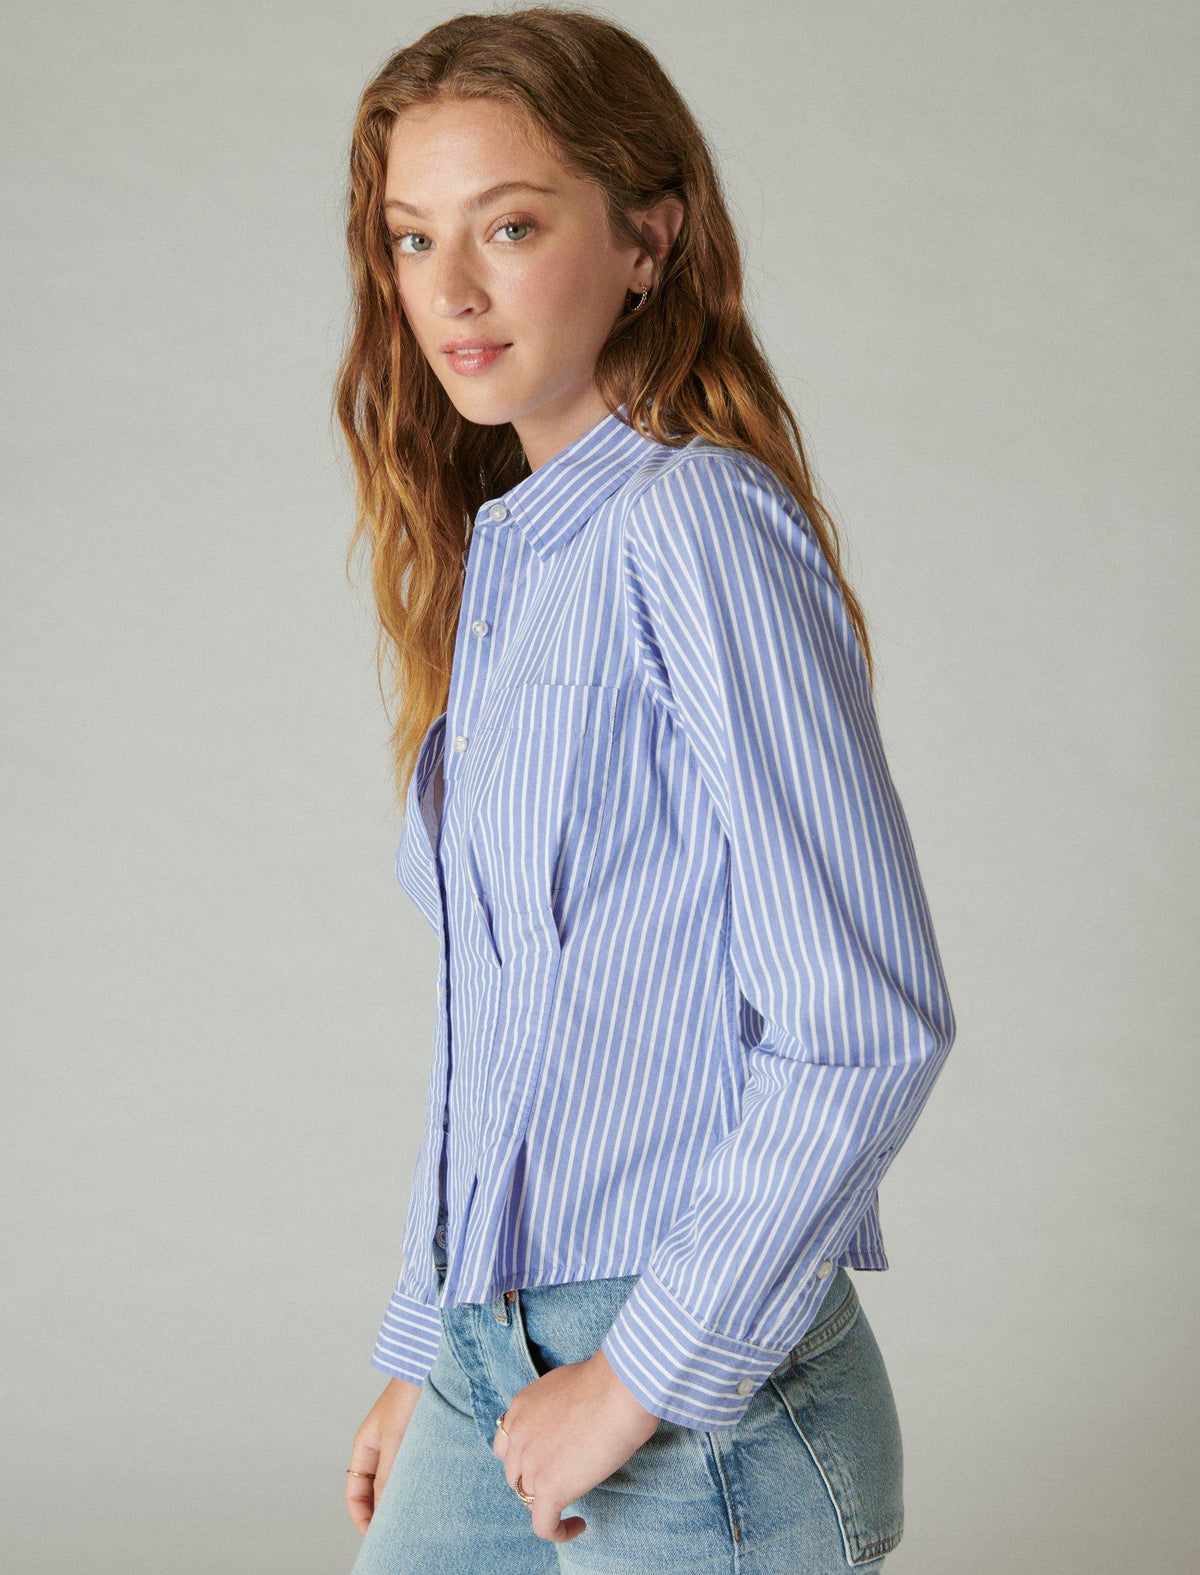 Lucky Brand Corset Shirt - Women's Clothing Button Down Tops Shirts Persian Jewel Stripe